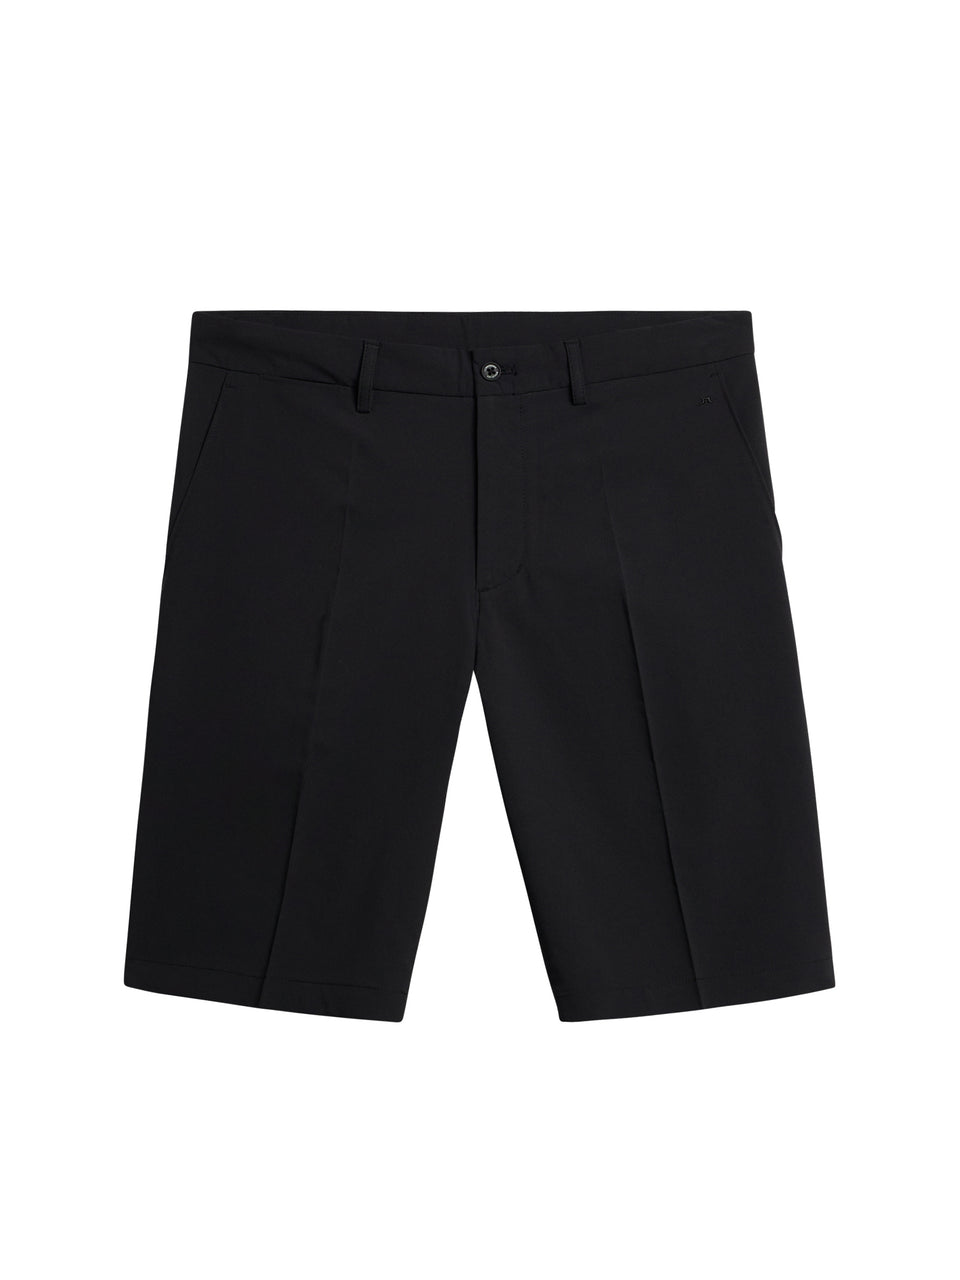 Somle Shorts / Black